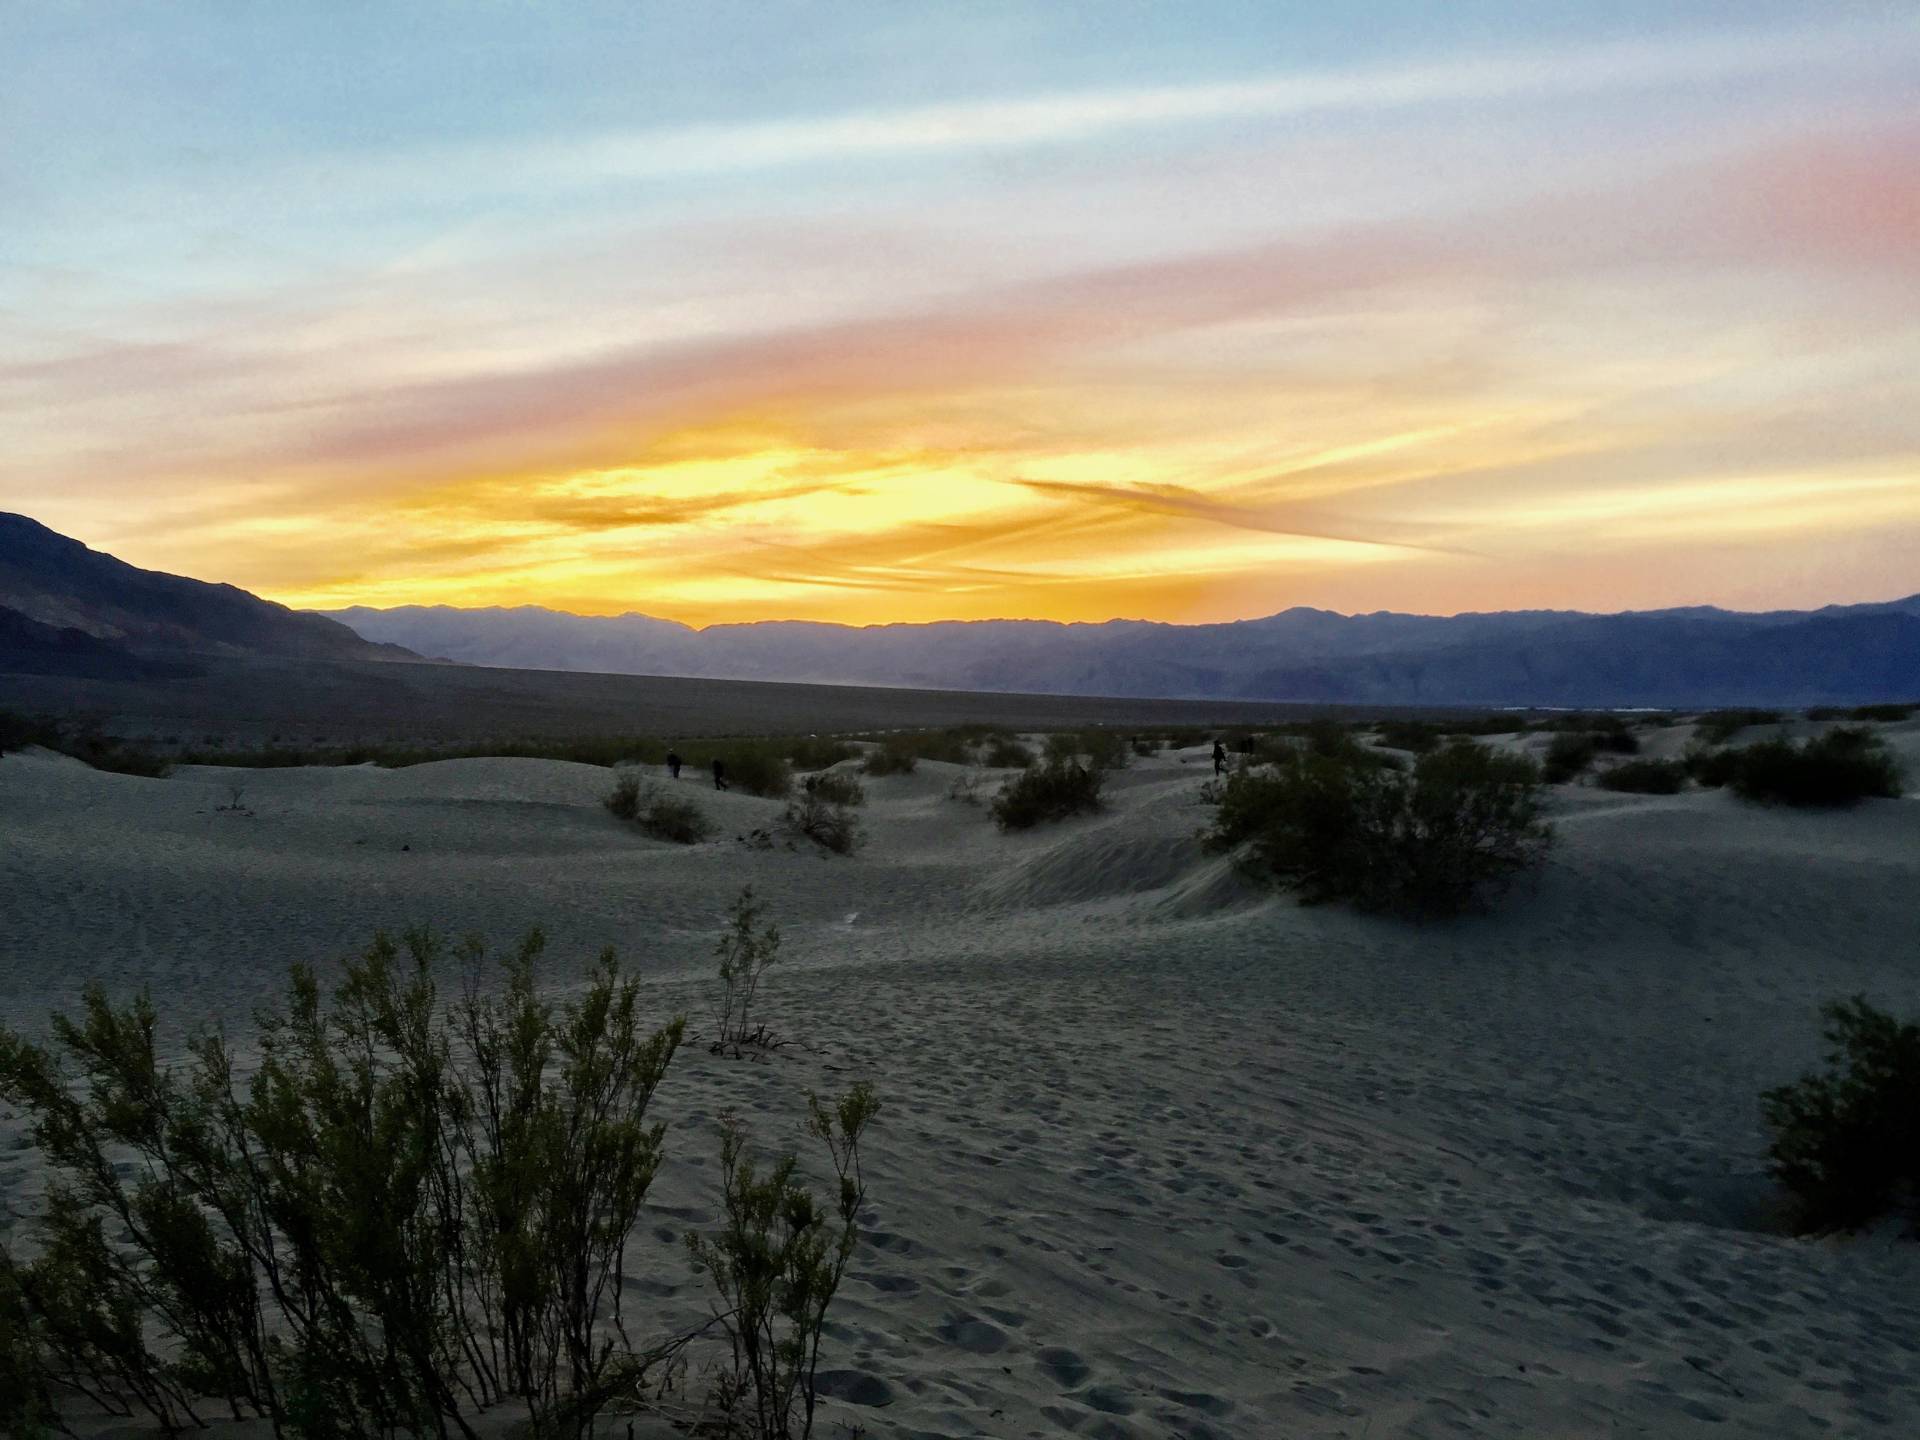 Sunset across the Mesquite Sand Dunes, Death Valley National Park, California